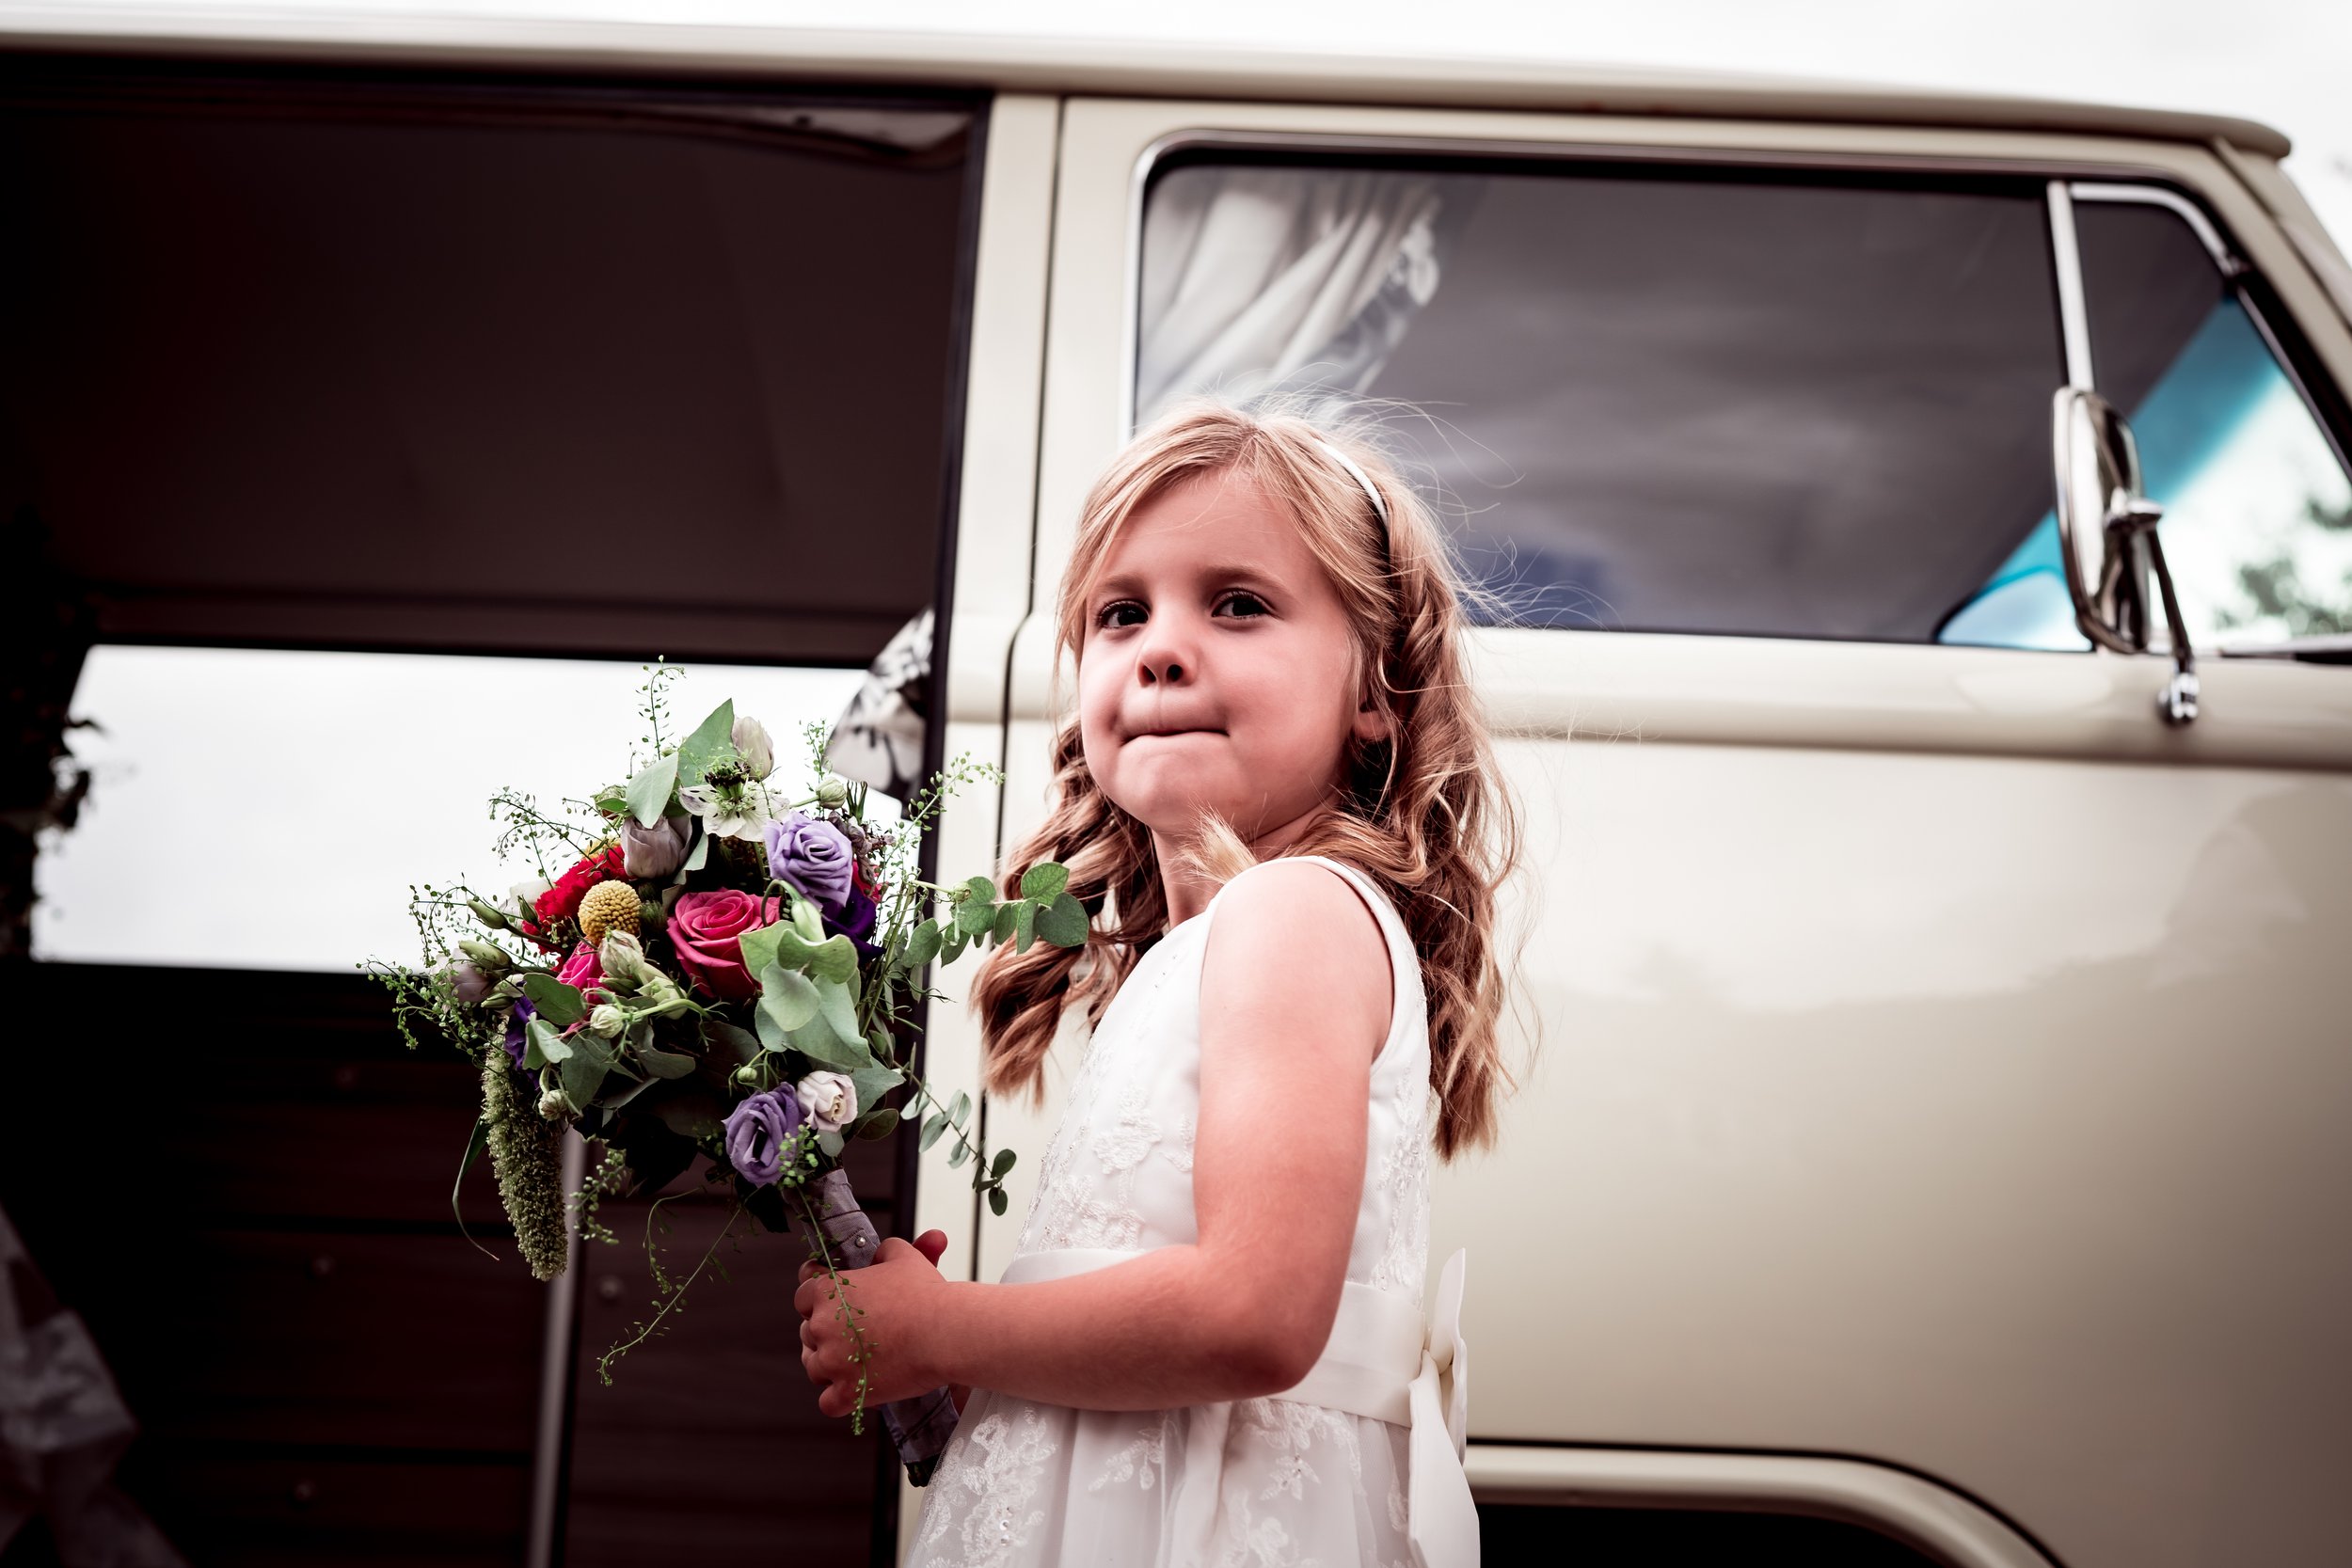 Walker_McCabe Wedding_Photographer Ashtree_Farm Market_Harborough Festival VW Colourful Wedding-14.jpg